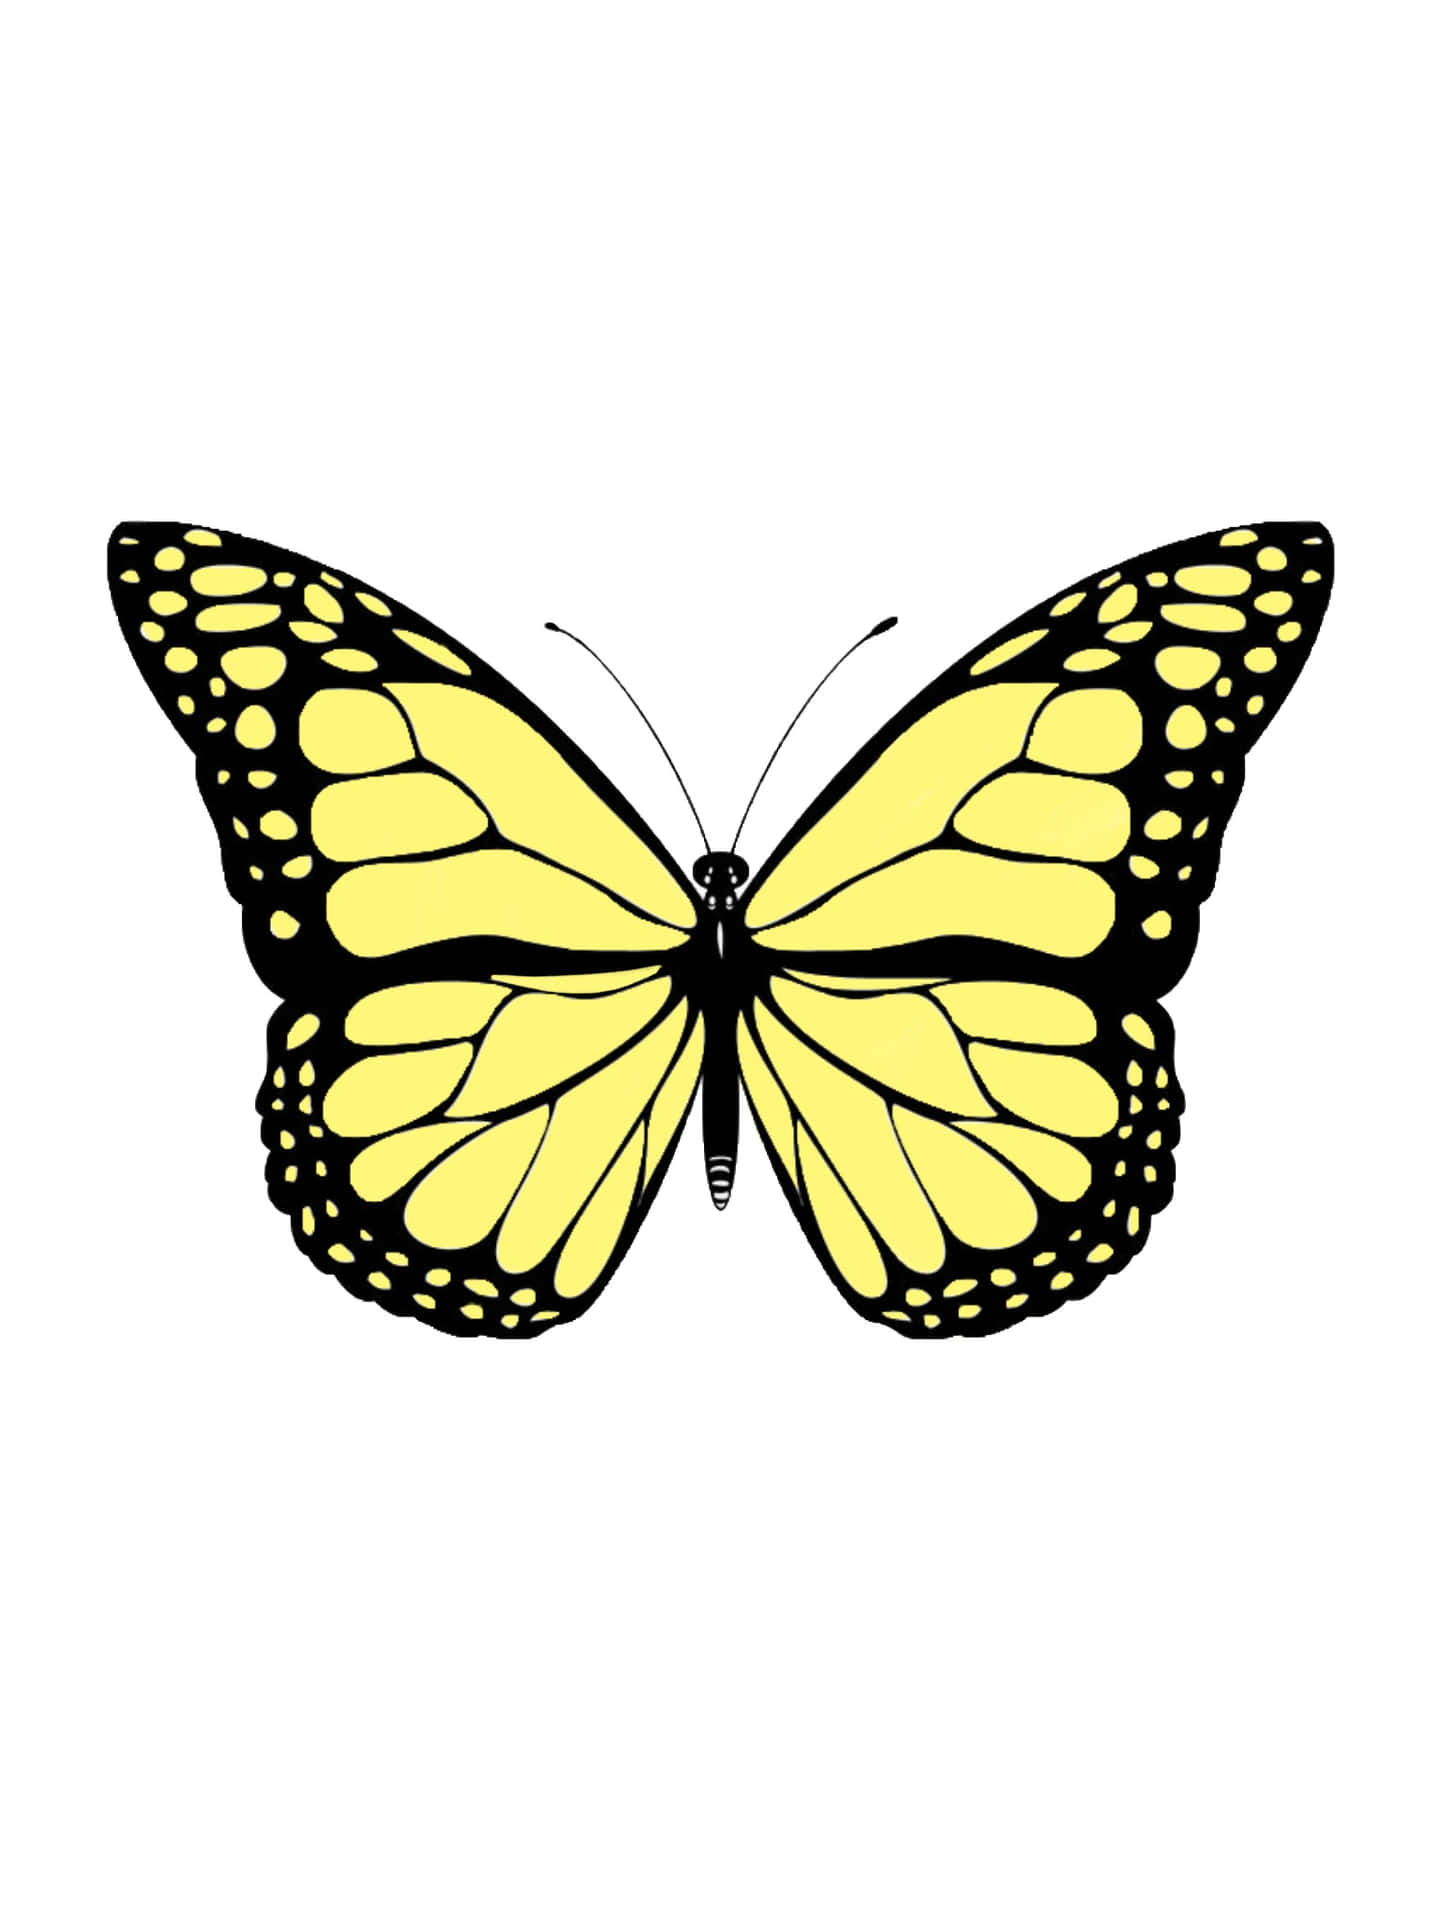 Three Cute Yellow Butterflies in Flight Wallpaper